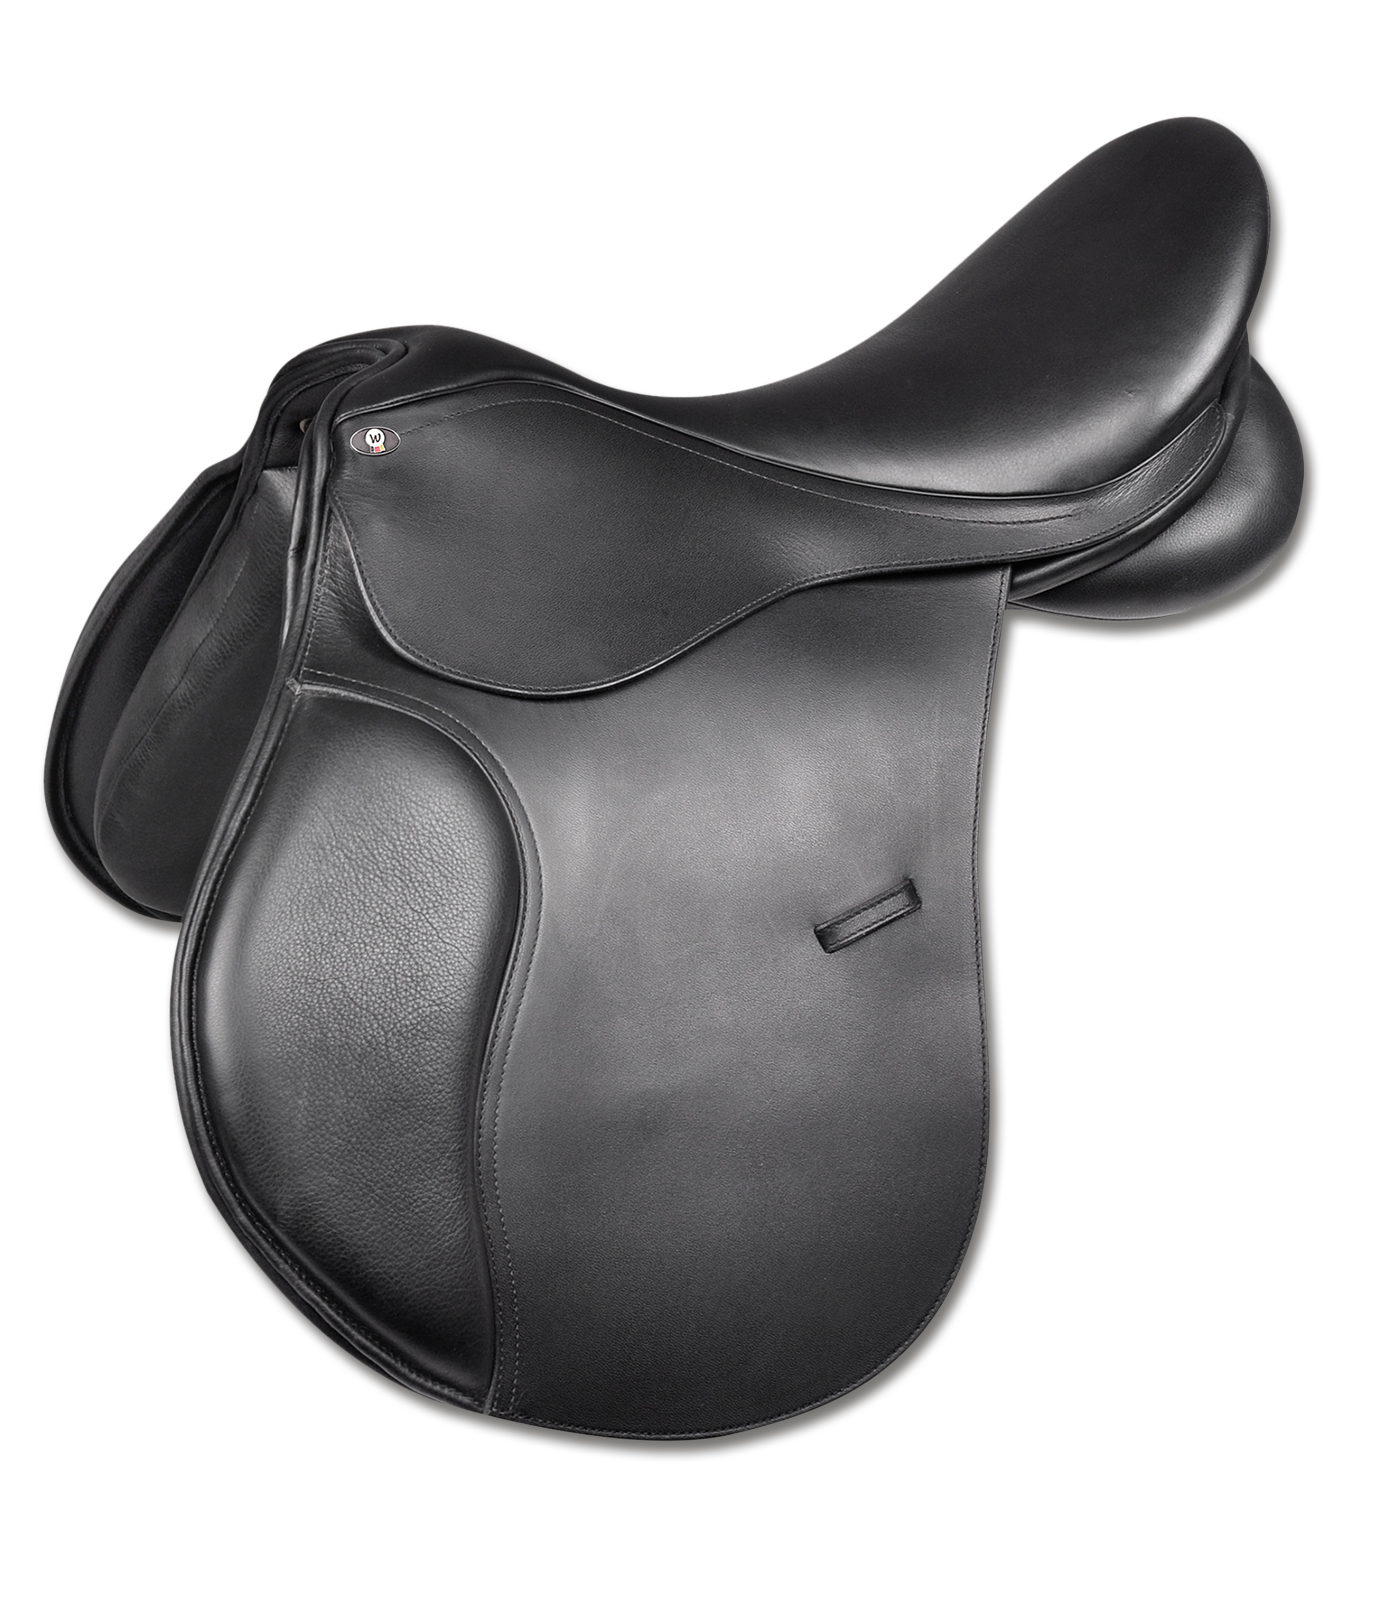 Comfort General Purpose Saddle, Leather black